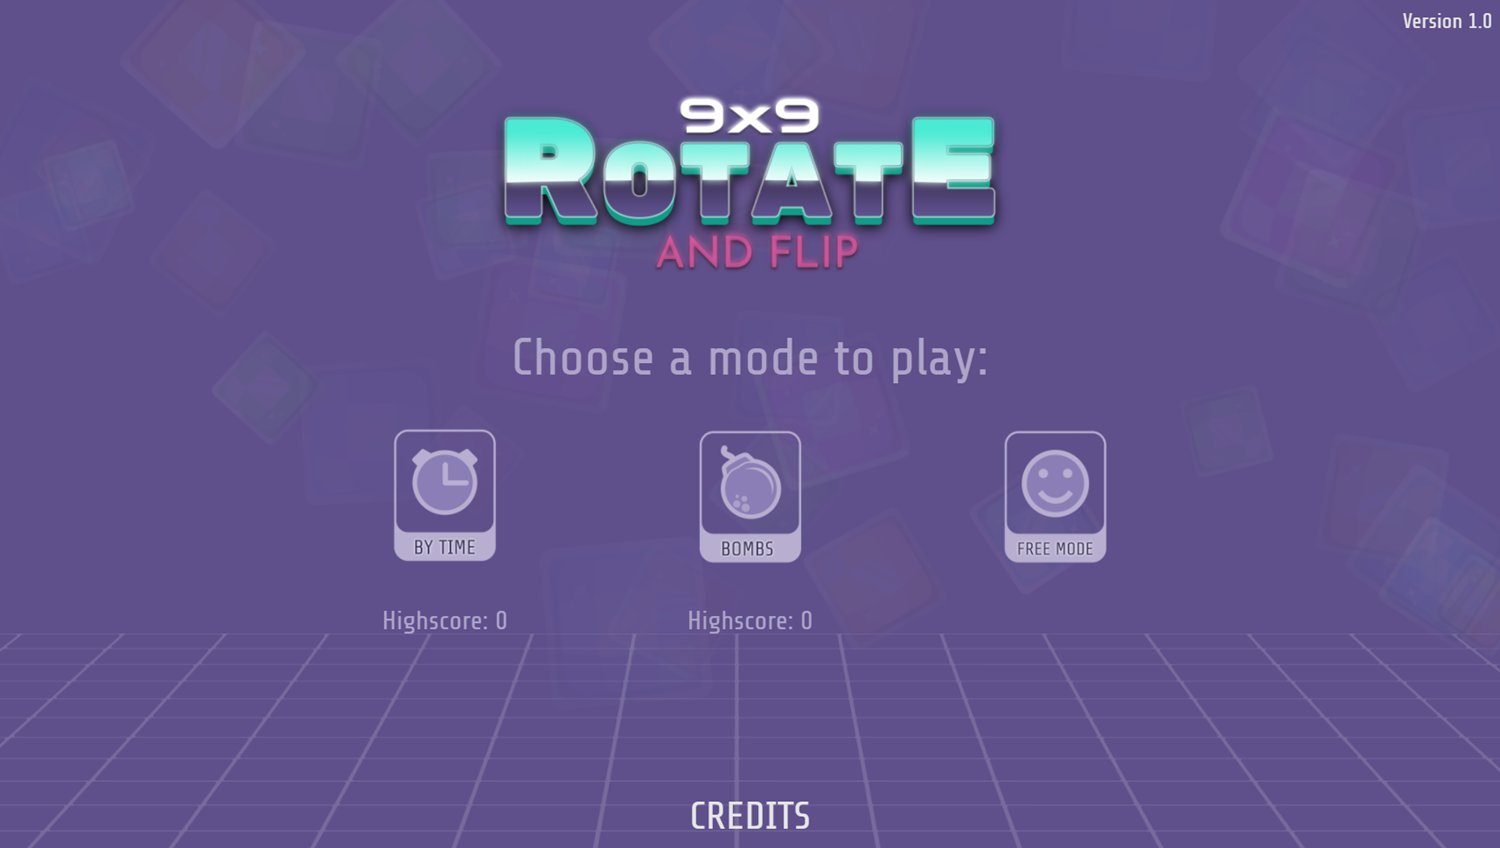 9x9 Rotate and Flip Game Menu Screenshot.